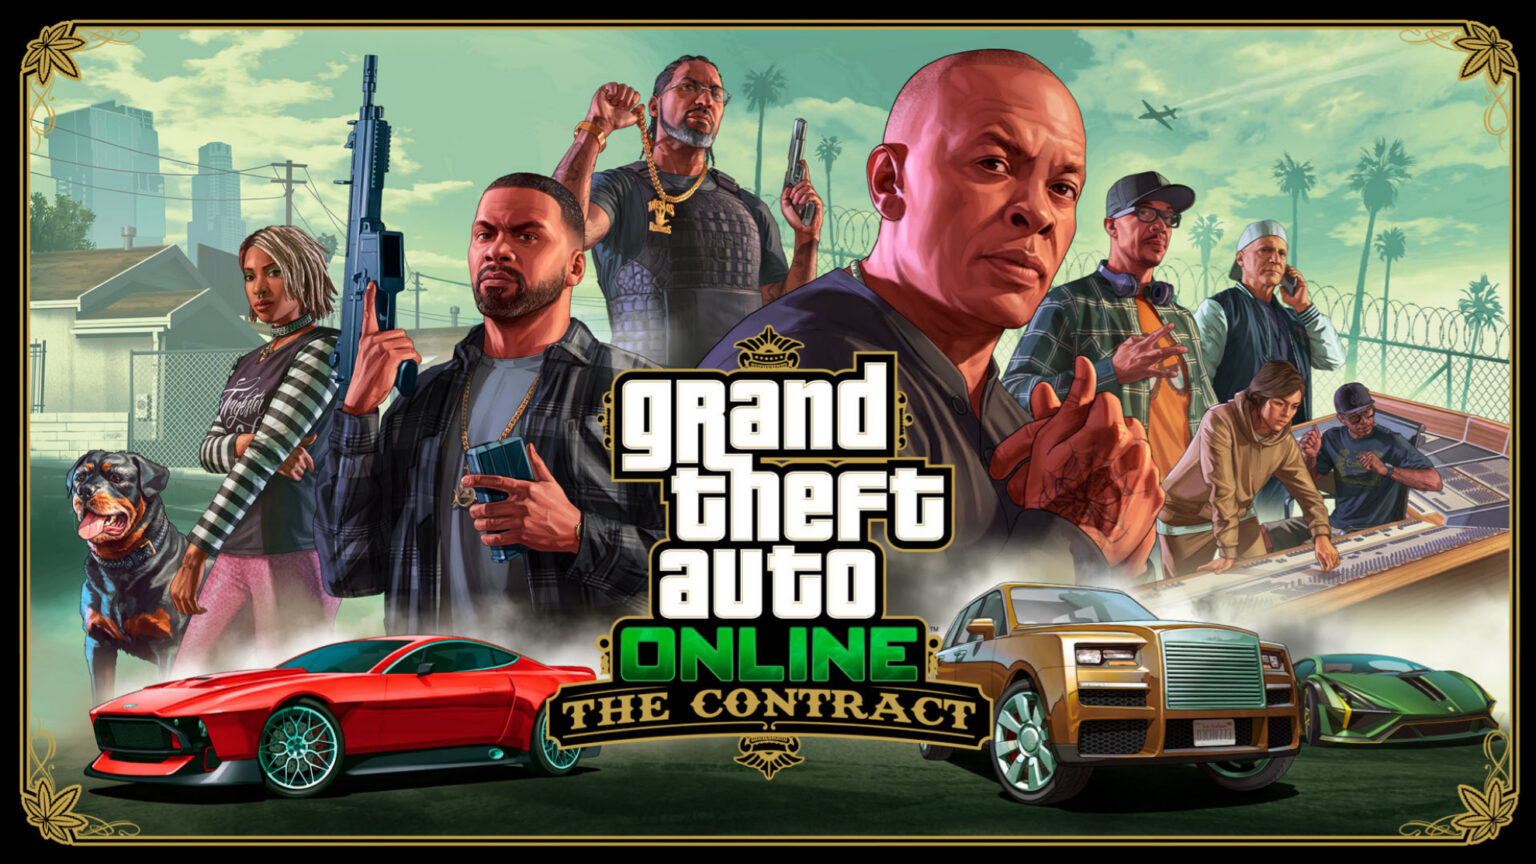 Dr. Dre Lanza canciones del DLC de GTA V 'The Contract' en Streaming